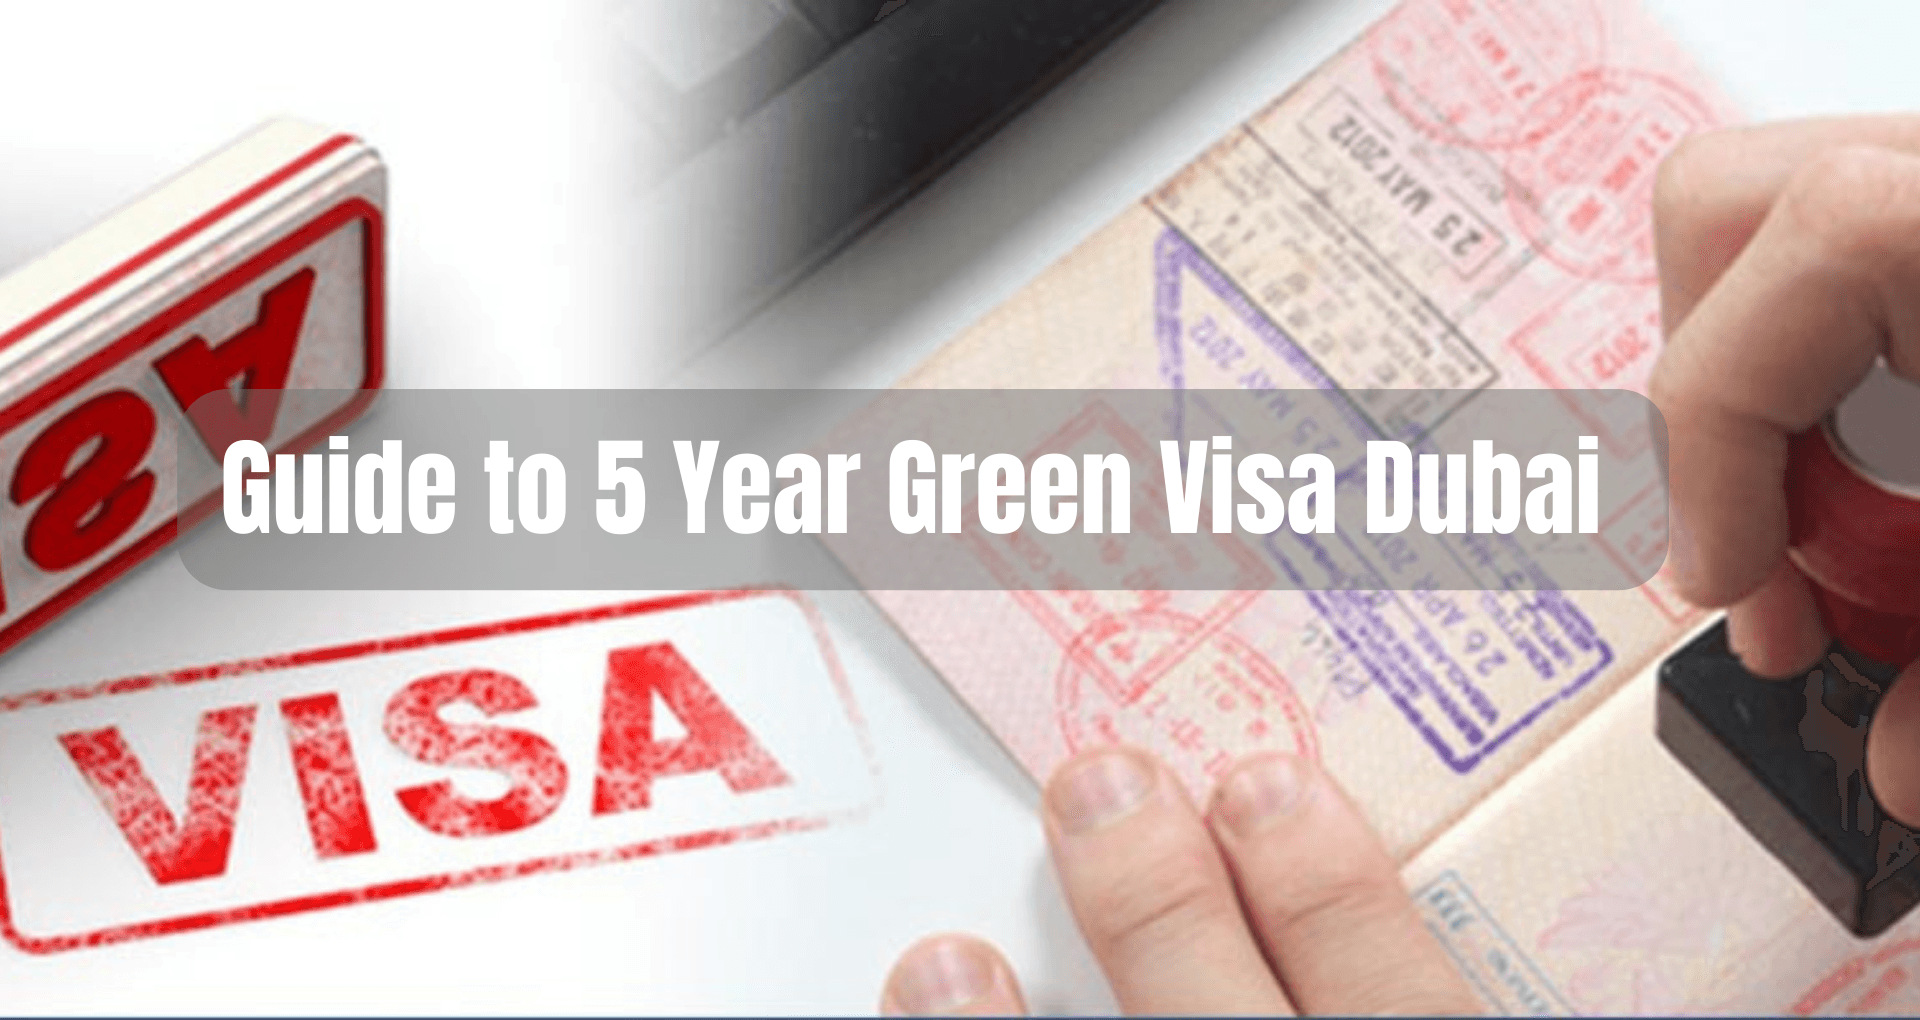 The Guide to 5 Year Green Visa Dubai